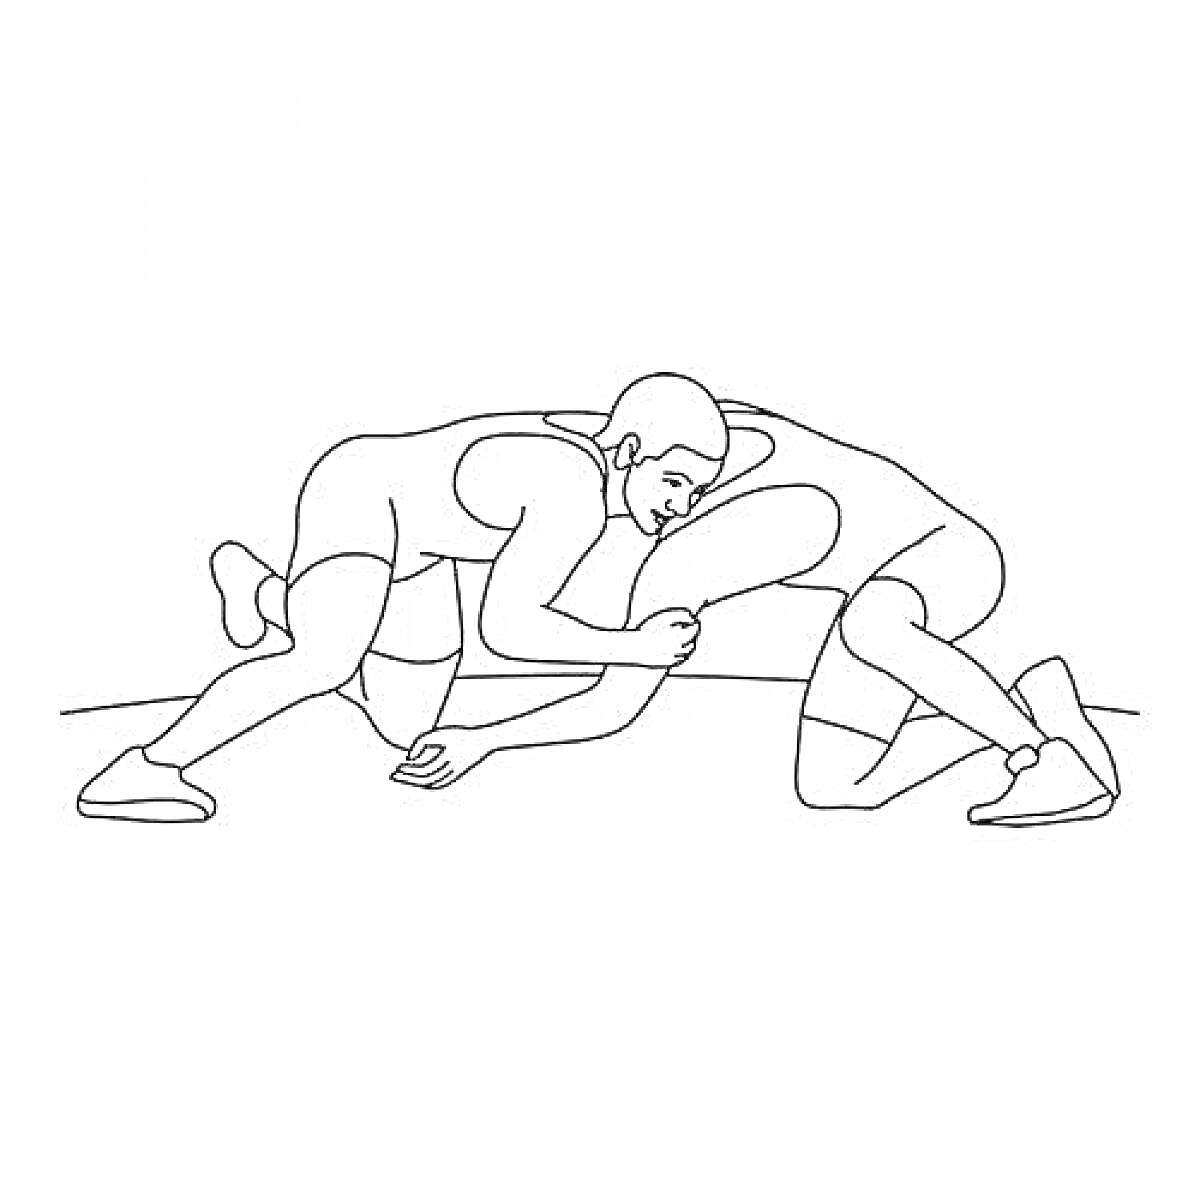 Раскраска Два борца в моменте борьбы на ковре